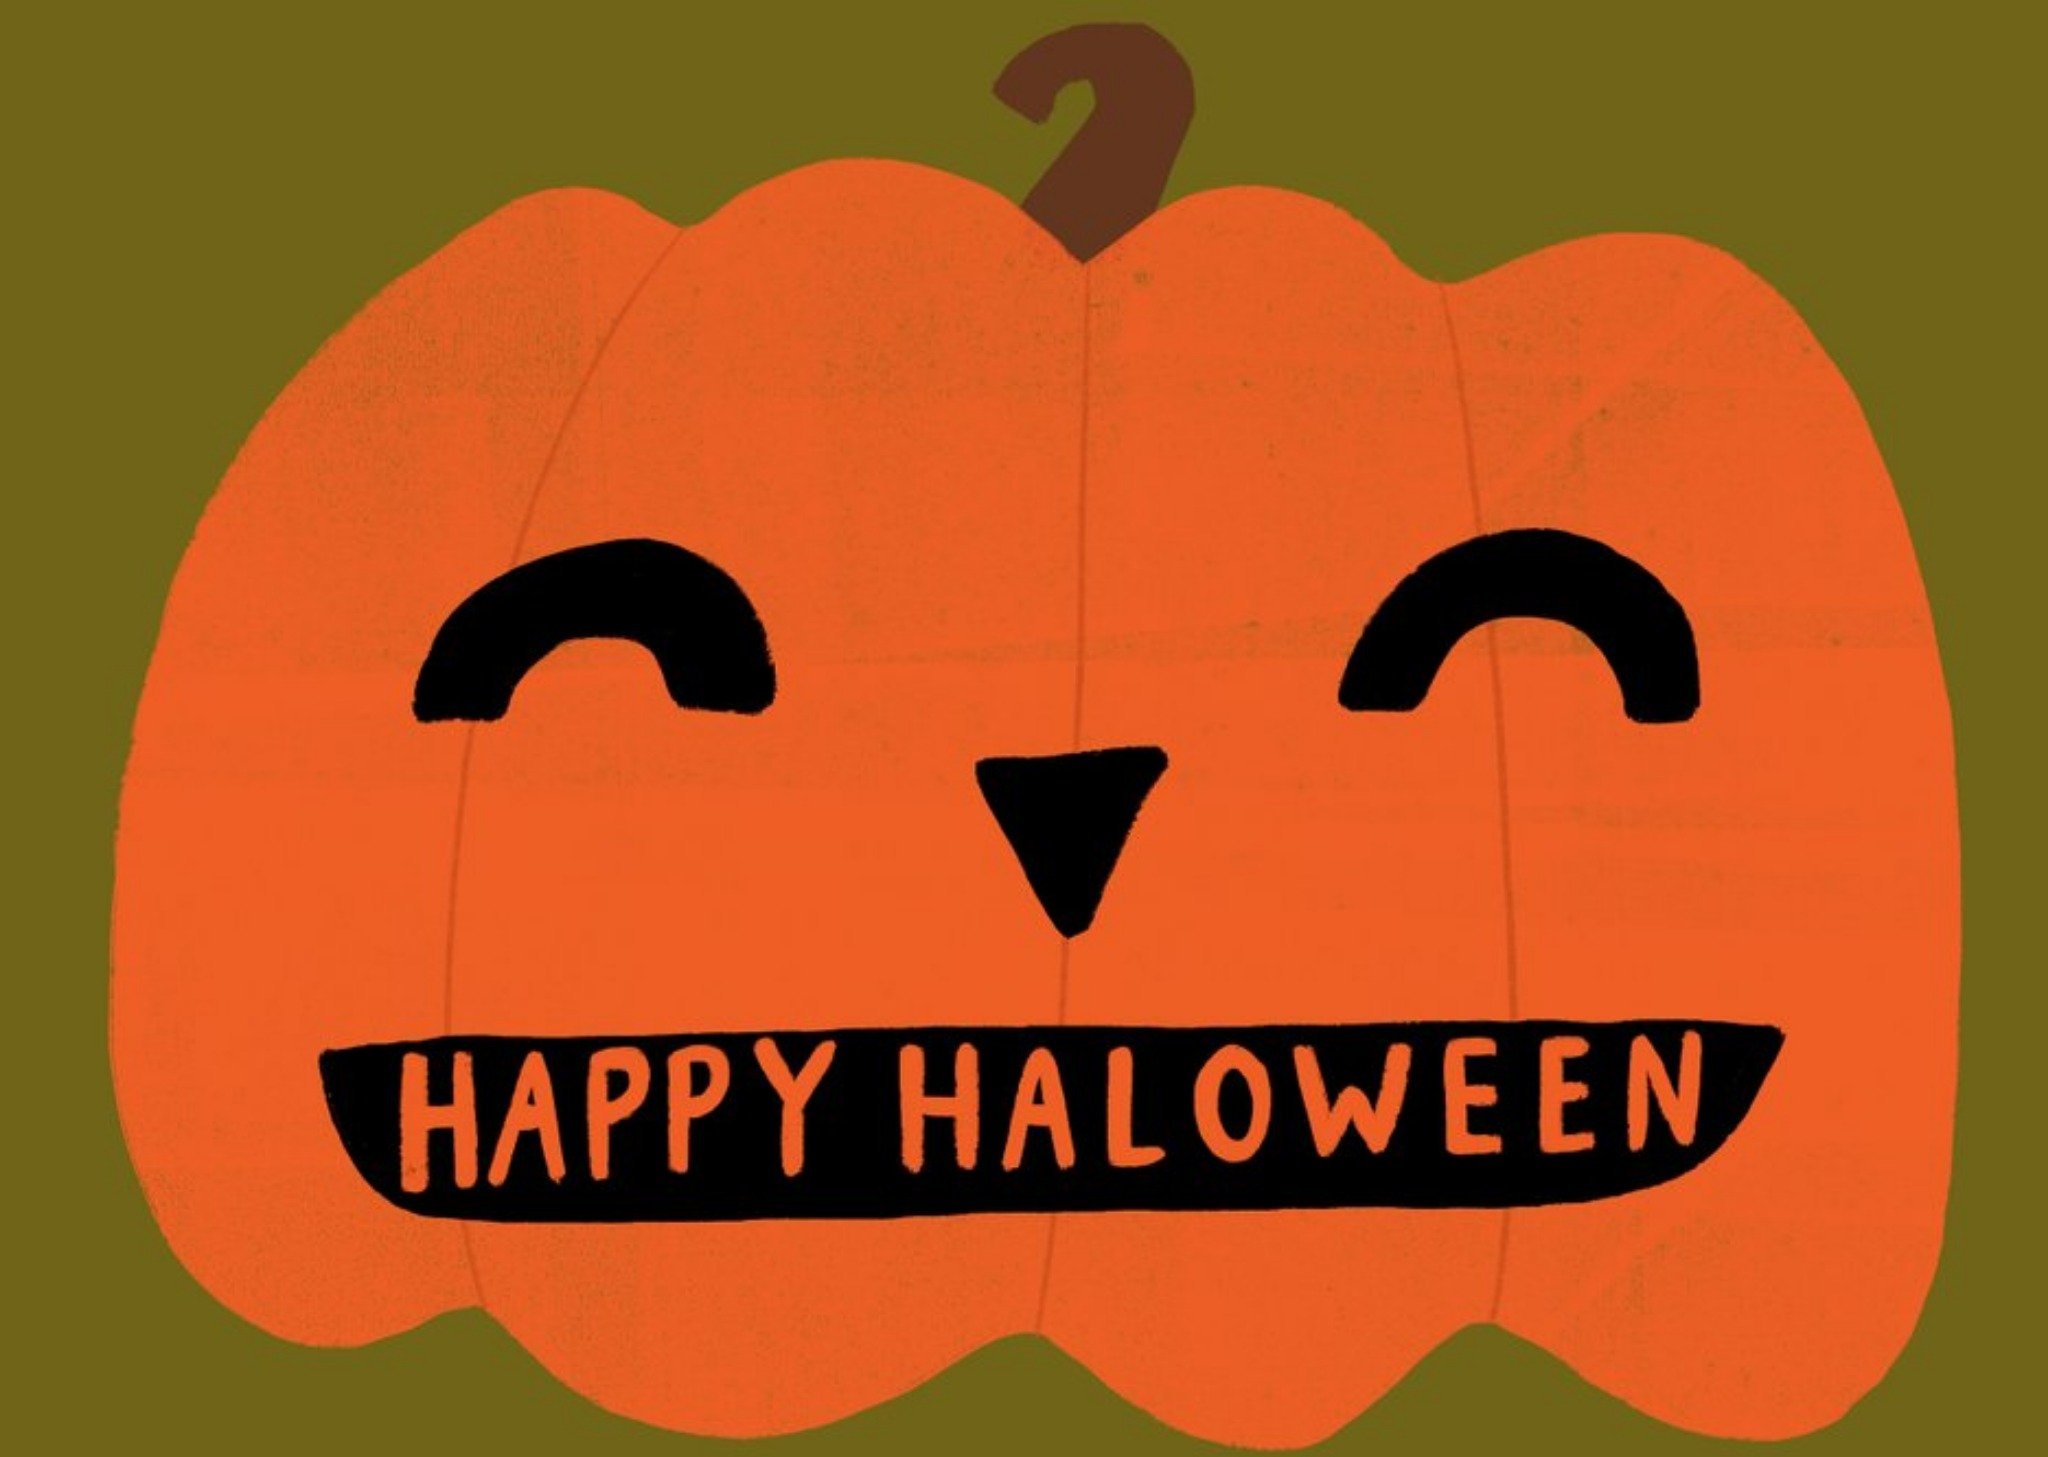 Moonpig Simple Bright Illustration Of A Pumpkin Happy Halloween Card, Large